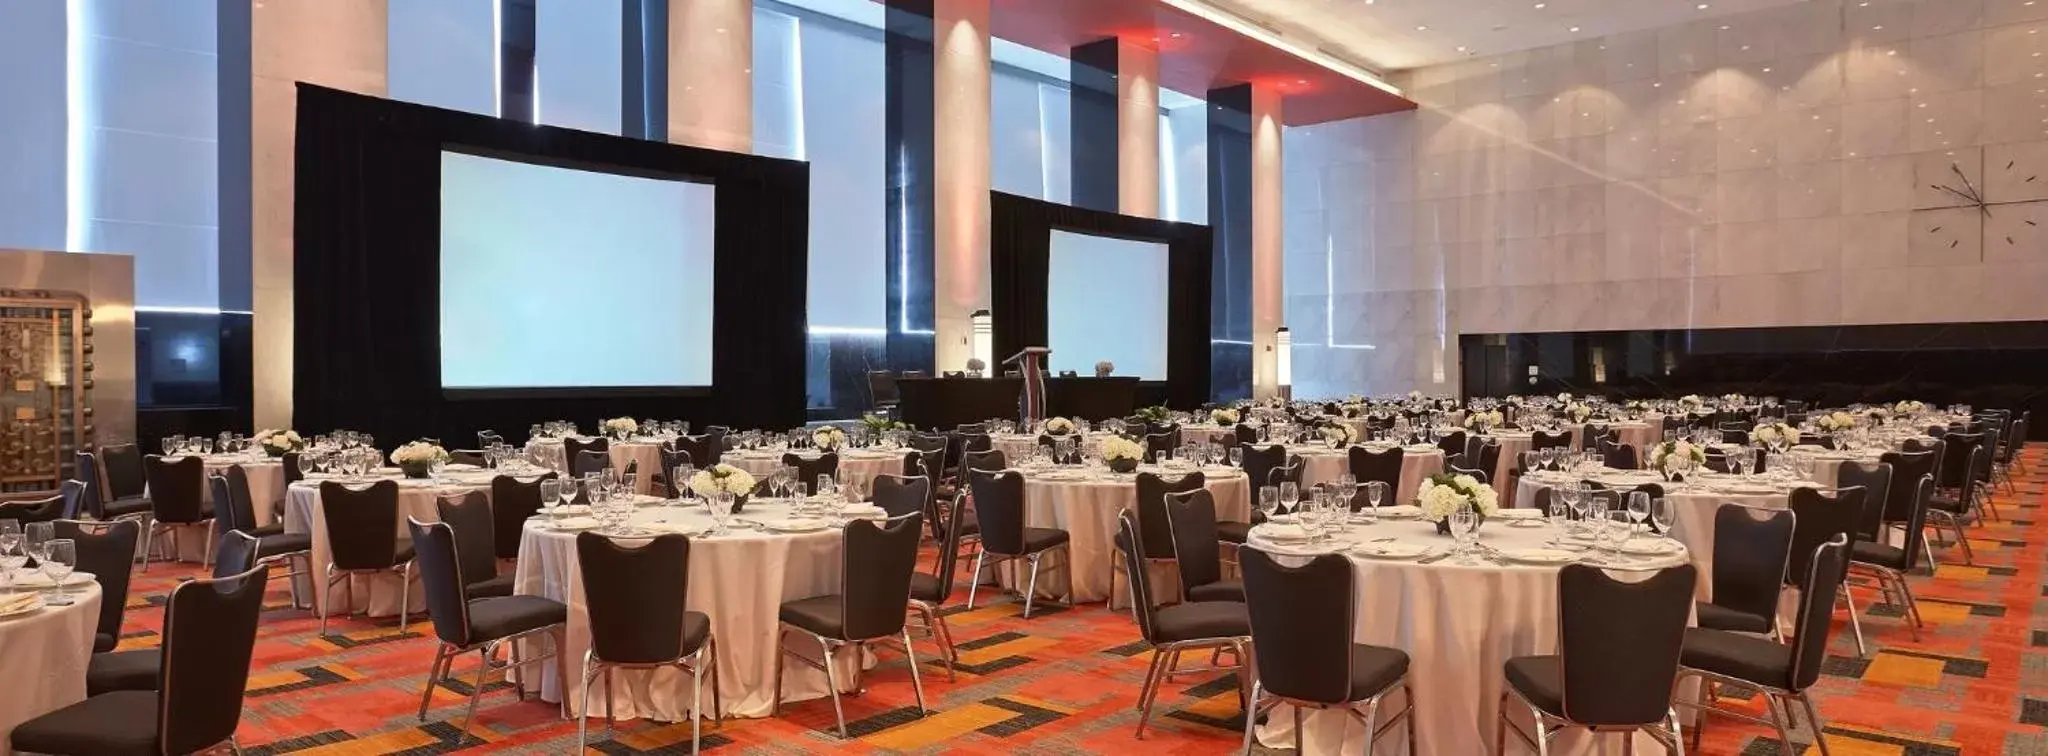 Banquet/Function facilities, Banquet Facilities in Loews Philadelphia Hotel